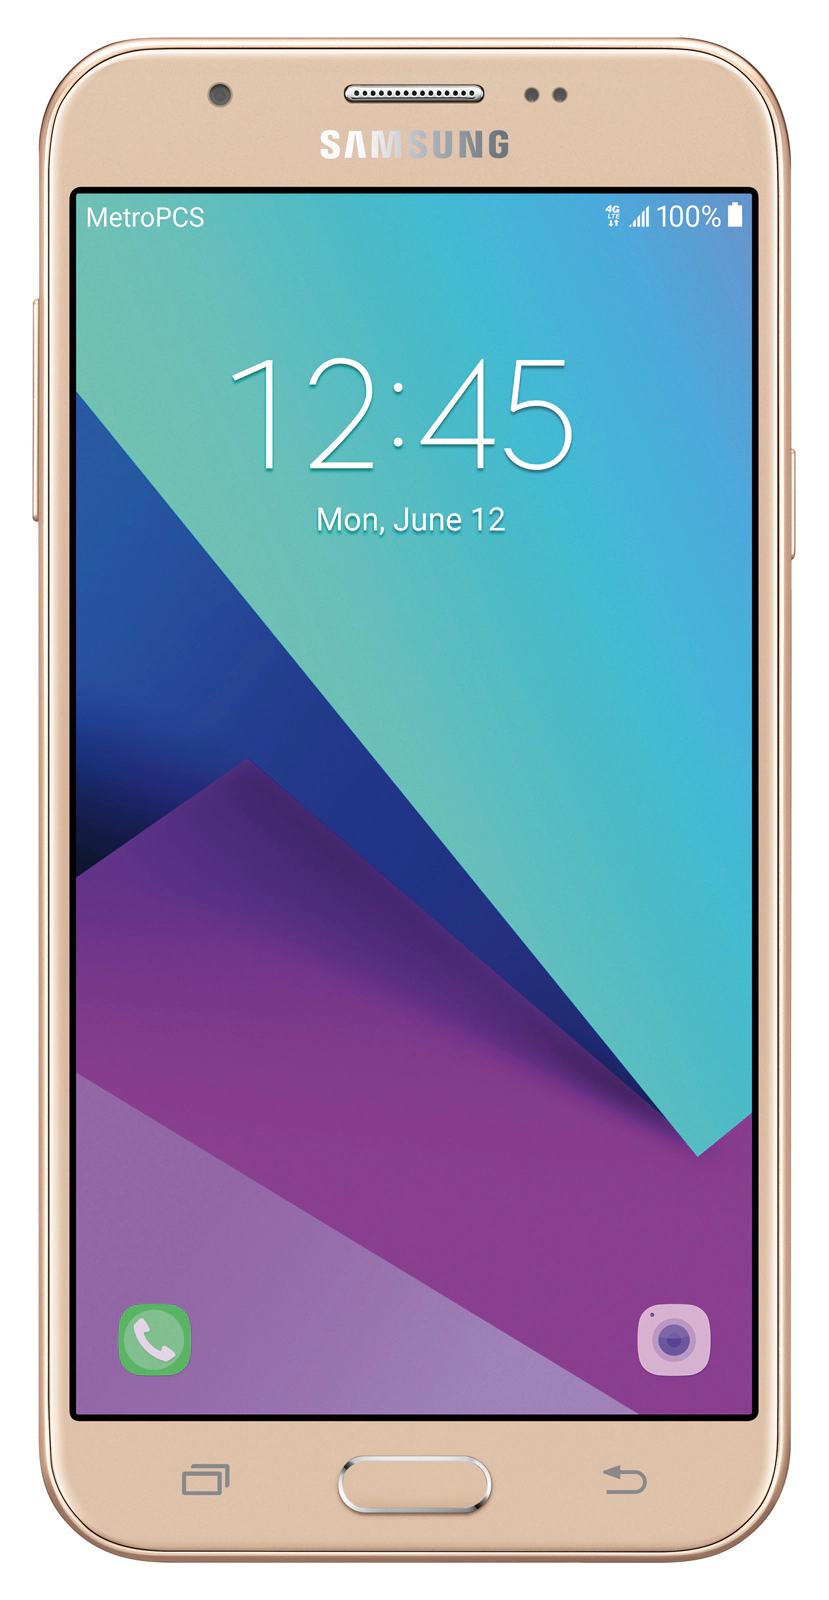 Samsung Galaxy J7 Prime - 16 GB - Champagne Gold - MetroPCS - GS